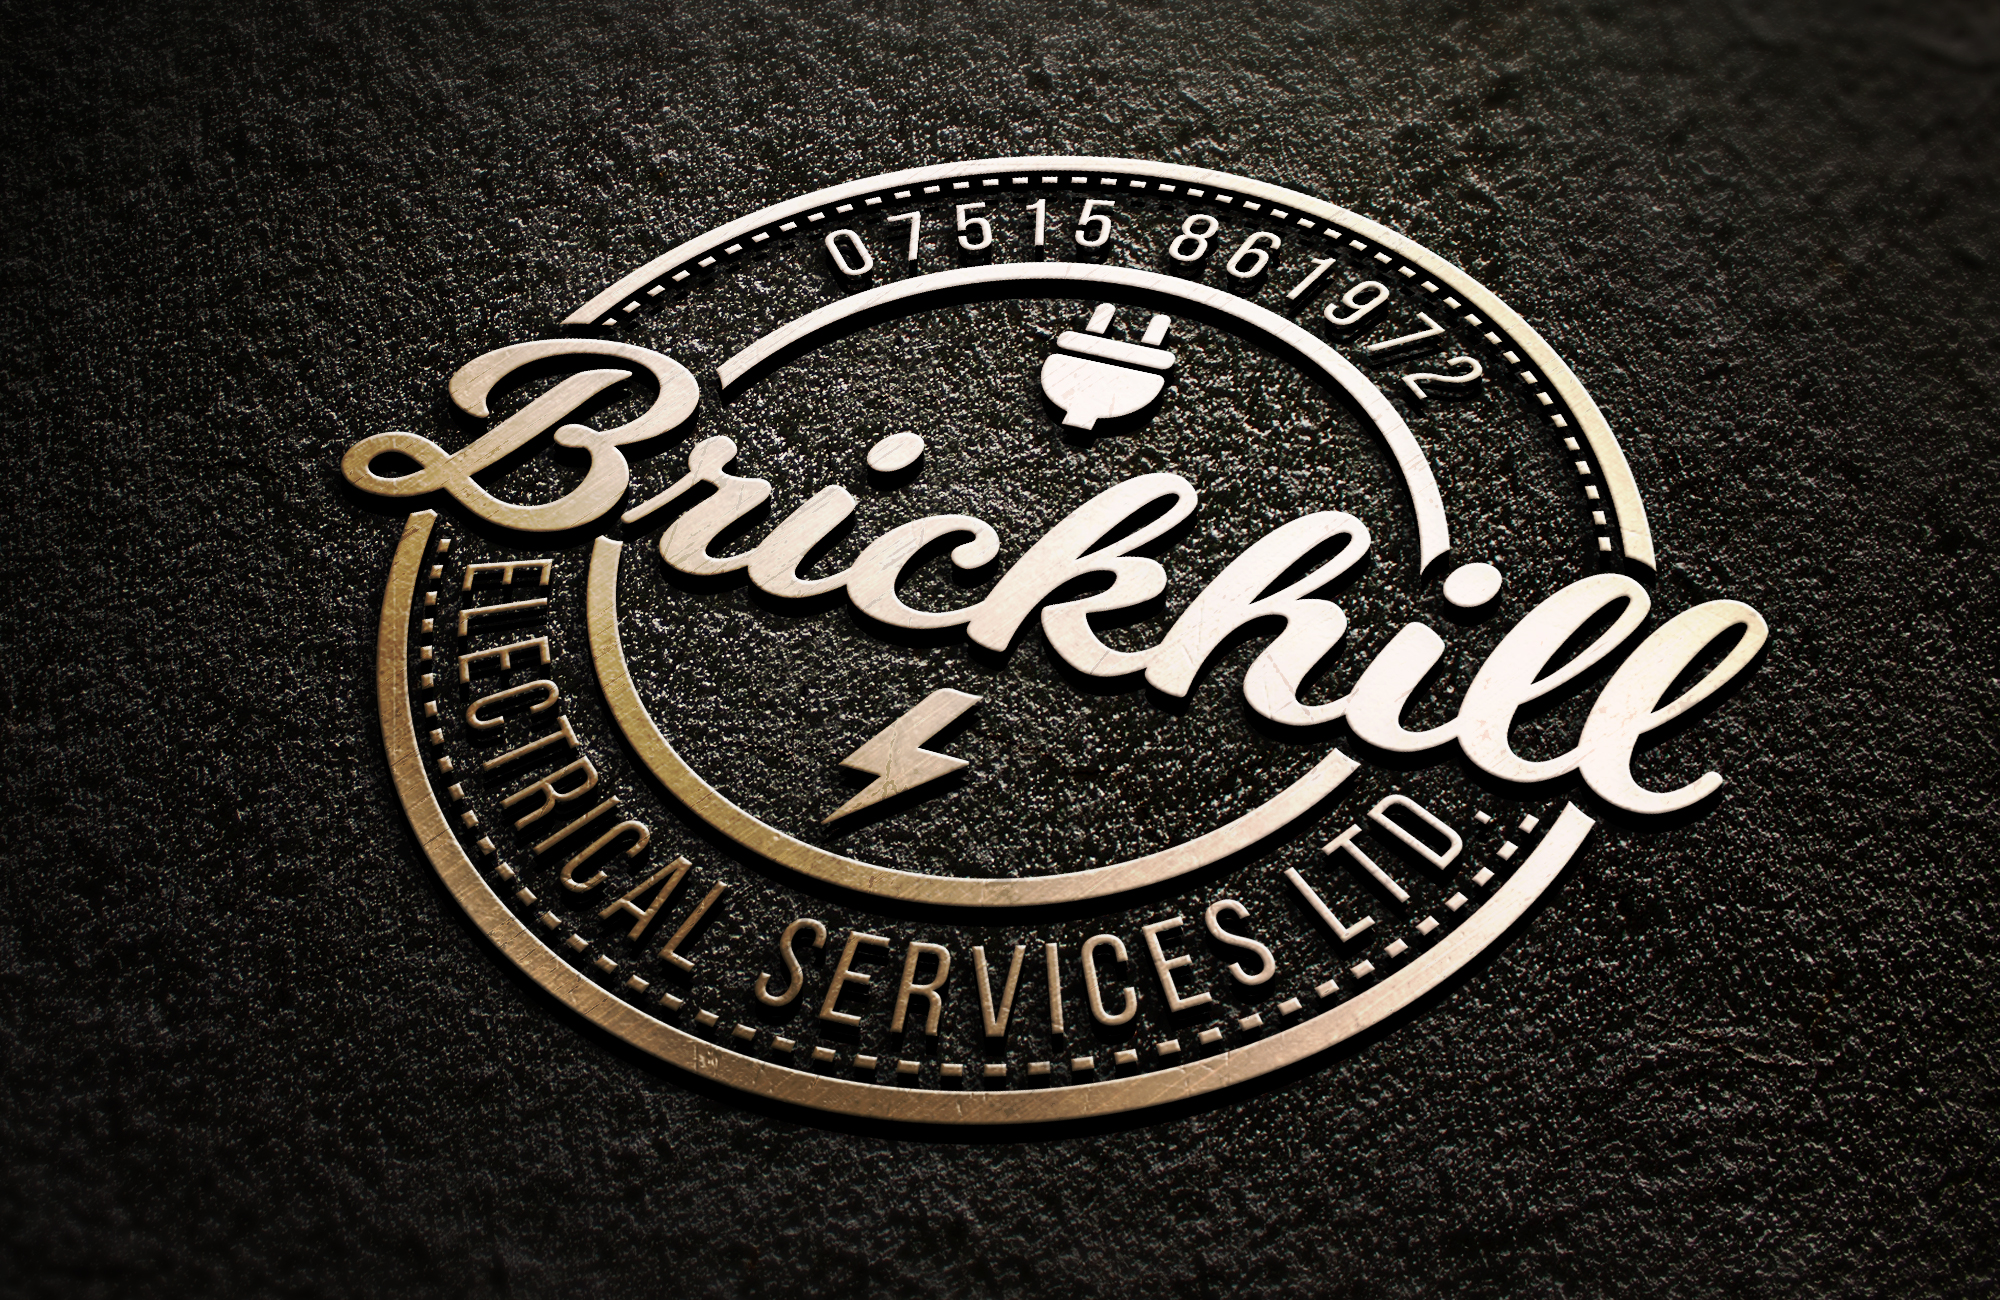 Brickhill Electrical Services Ltd.